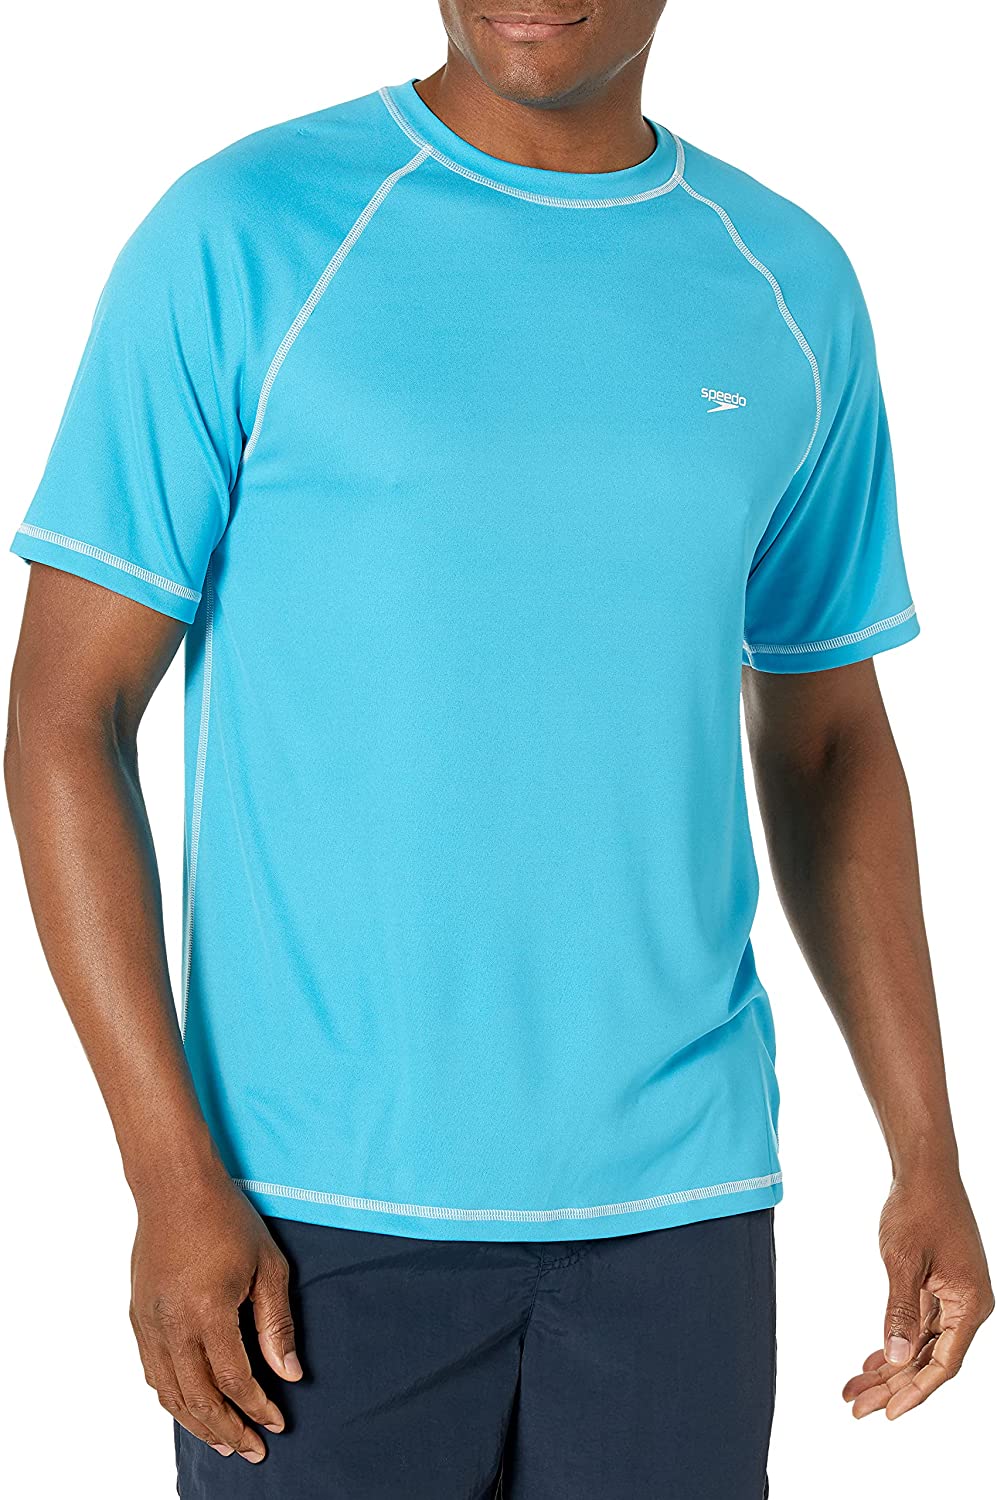 Speedo Men's UV Swim Shirt Short Sleeve Loose Fit Easy Tee